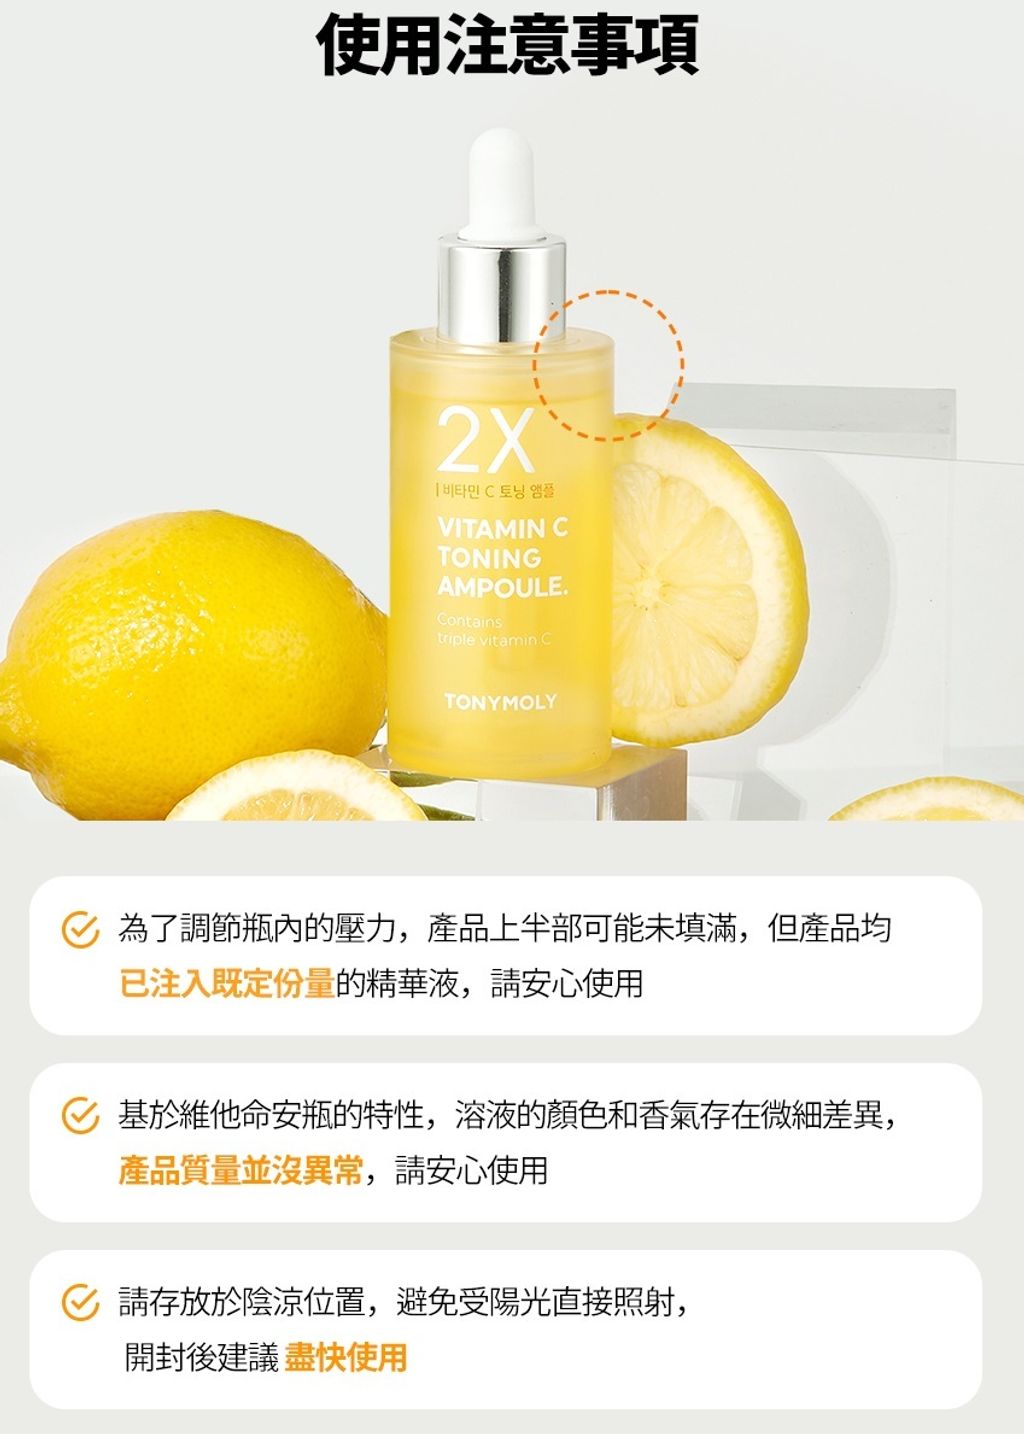 2X-Vitamin-C-Toning-Ampoule_hk_1.jpg